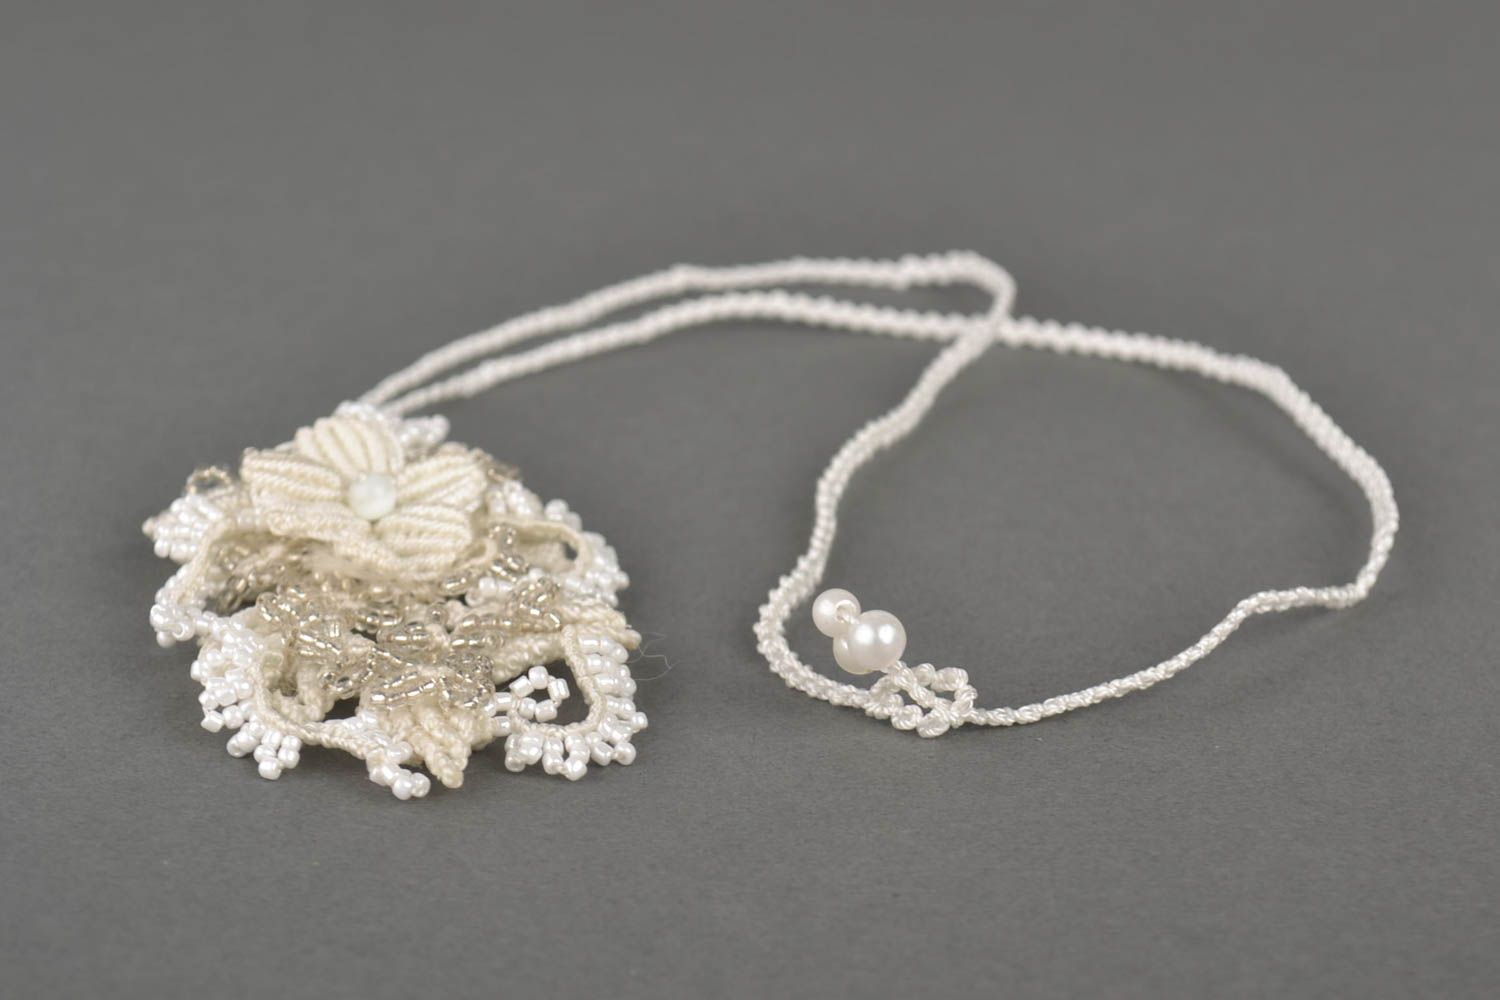 Handmade stylish jewelry unusual pendant made of beads textile pendant photo 4